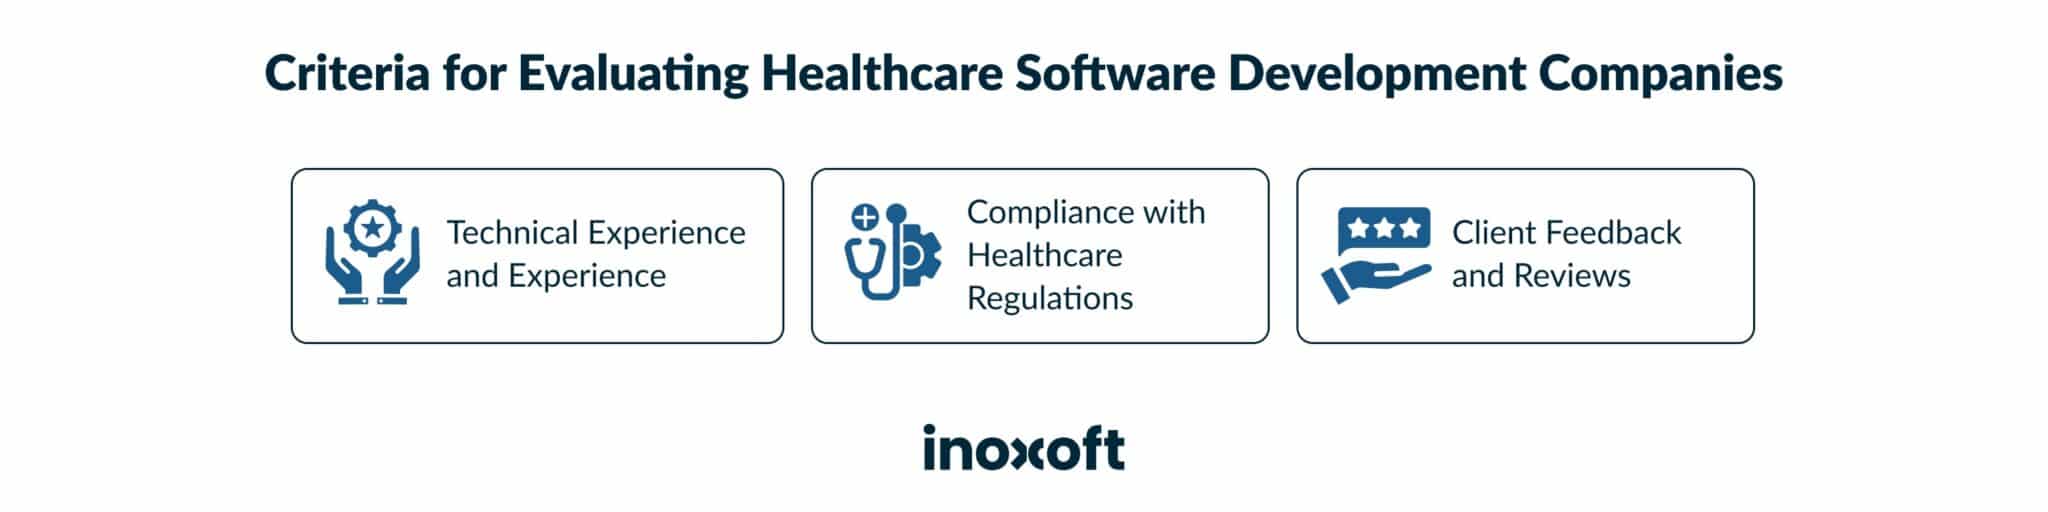 Criteria For Evaluating Healthcare Software Development Companies